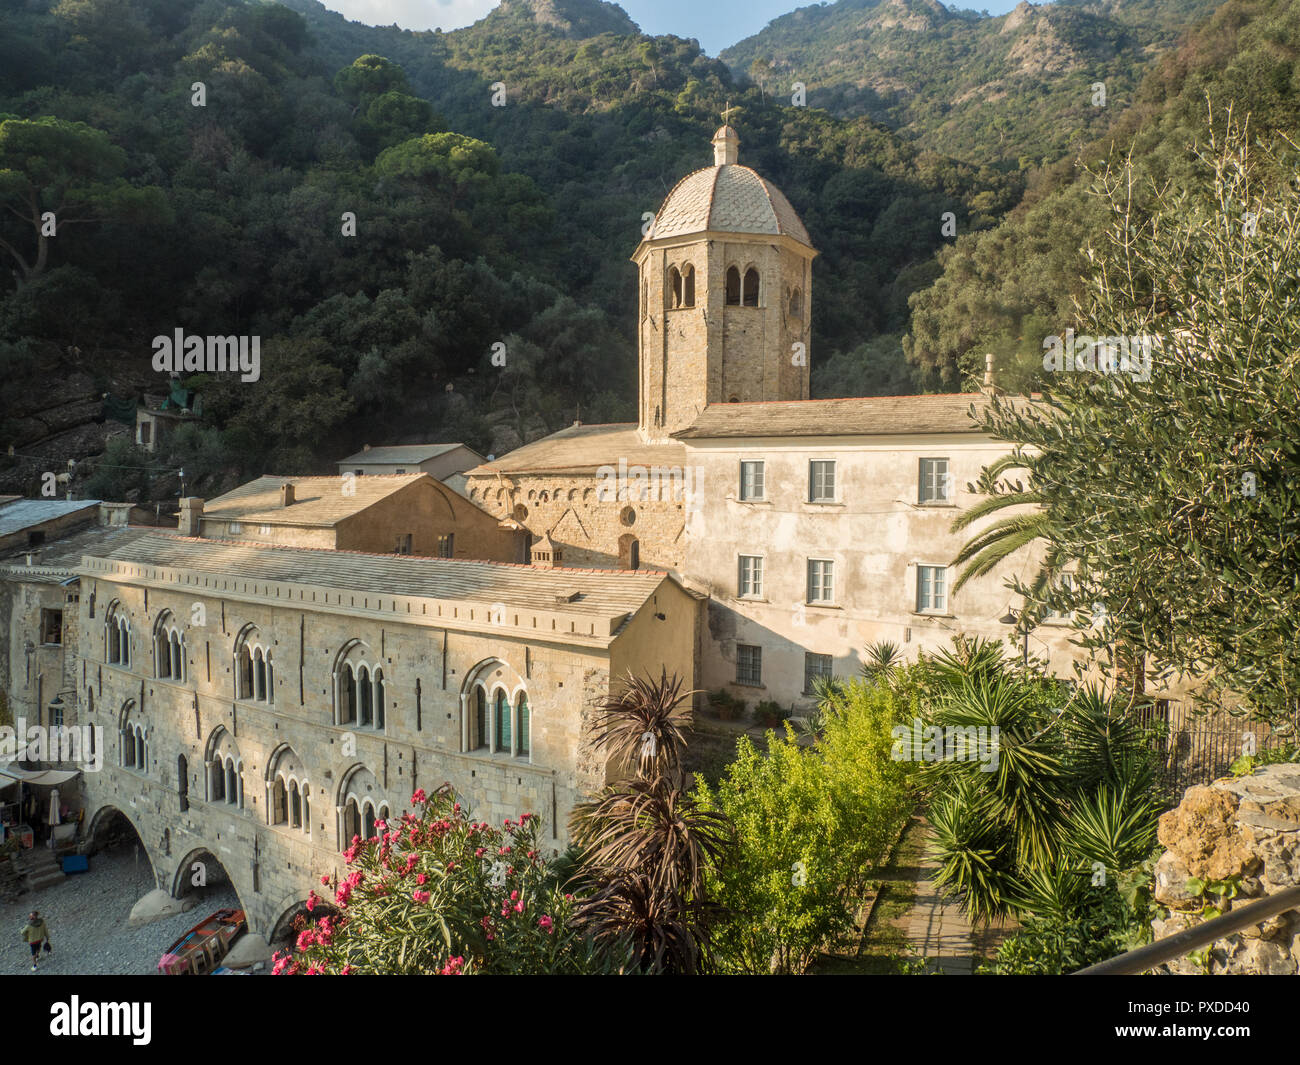 San Fruttuoso with a medieval Abbey, Liguria region, Italy. Stock Photo